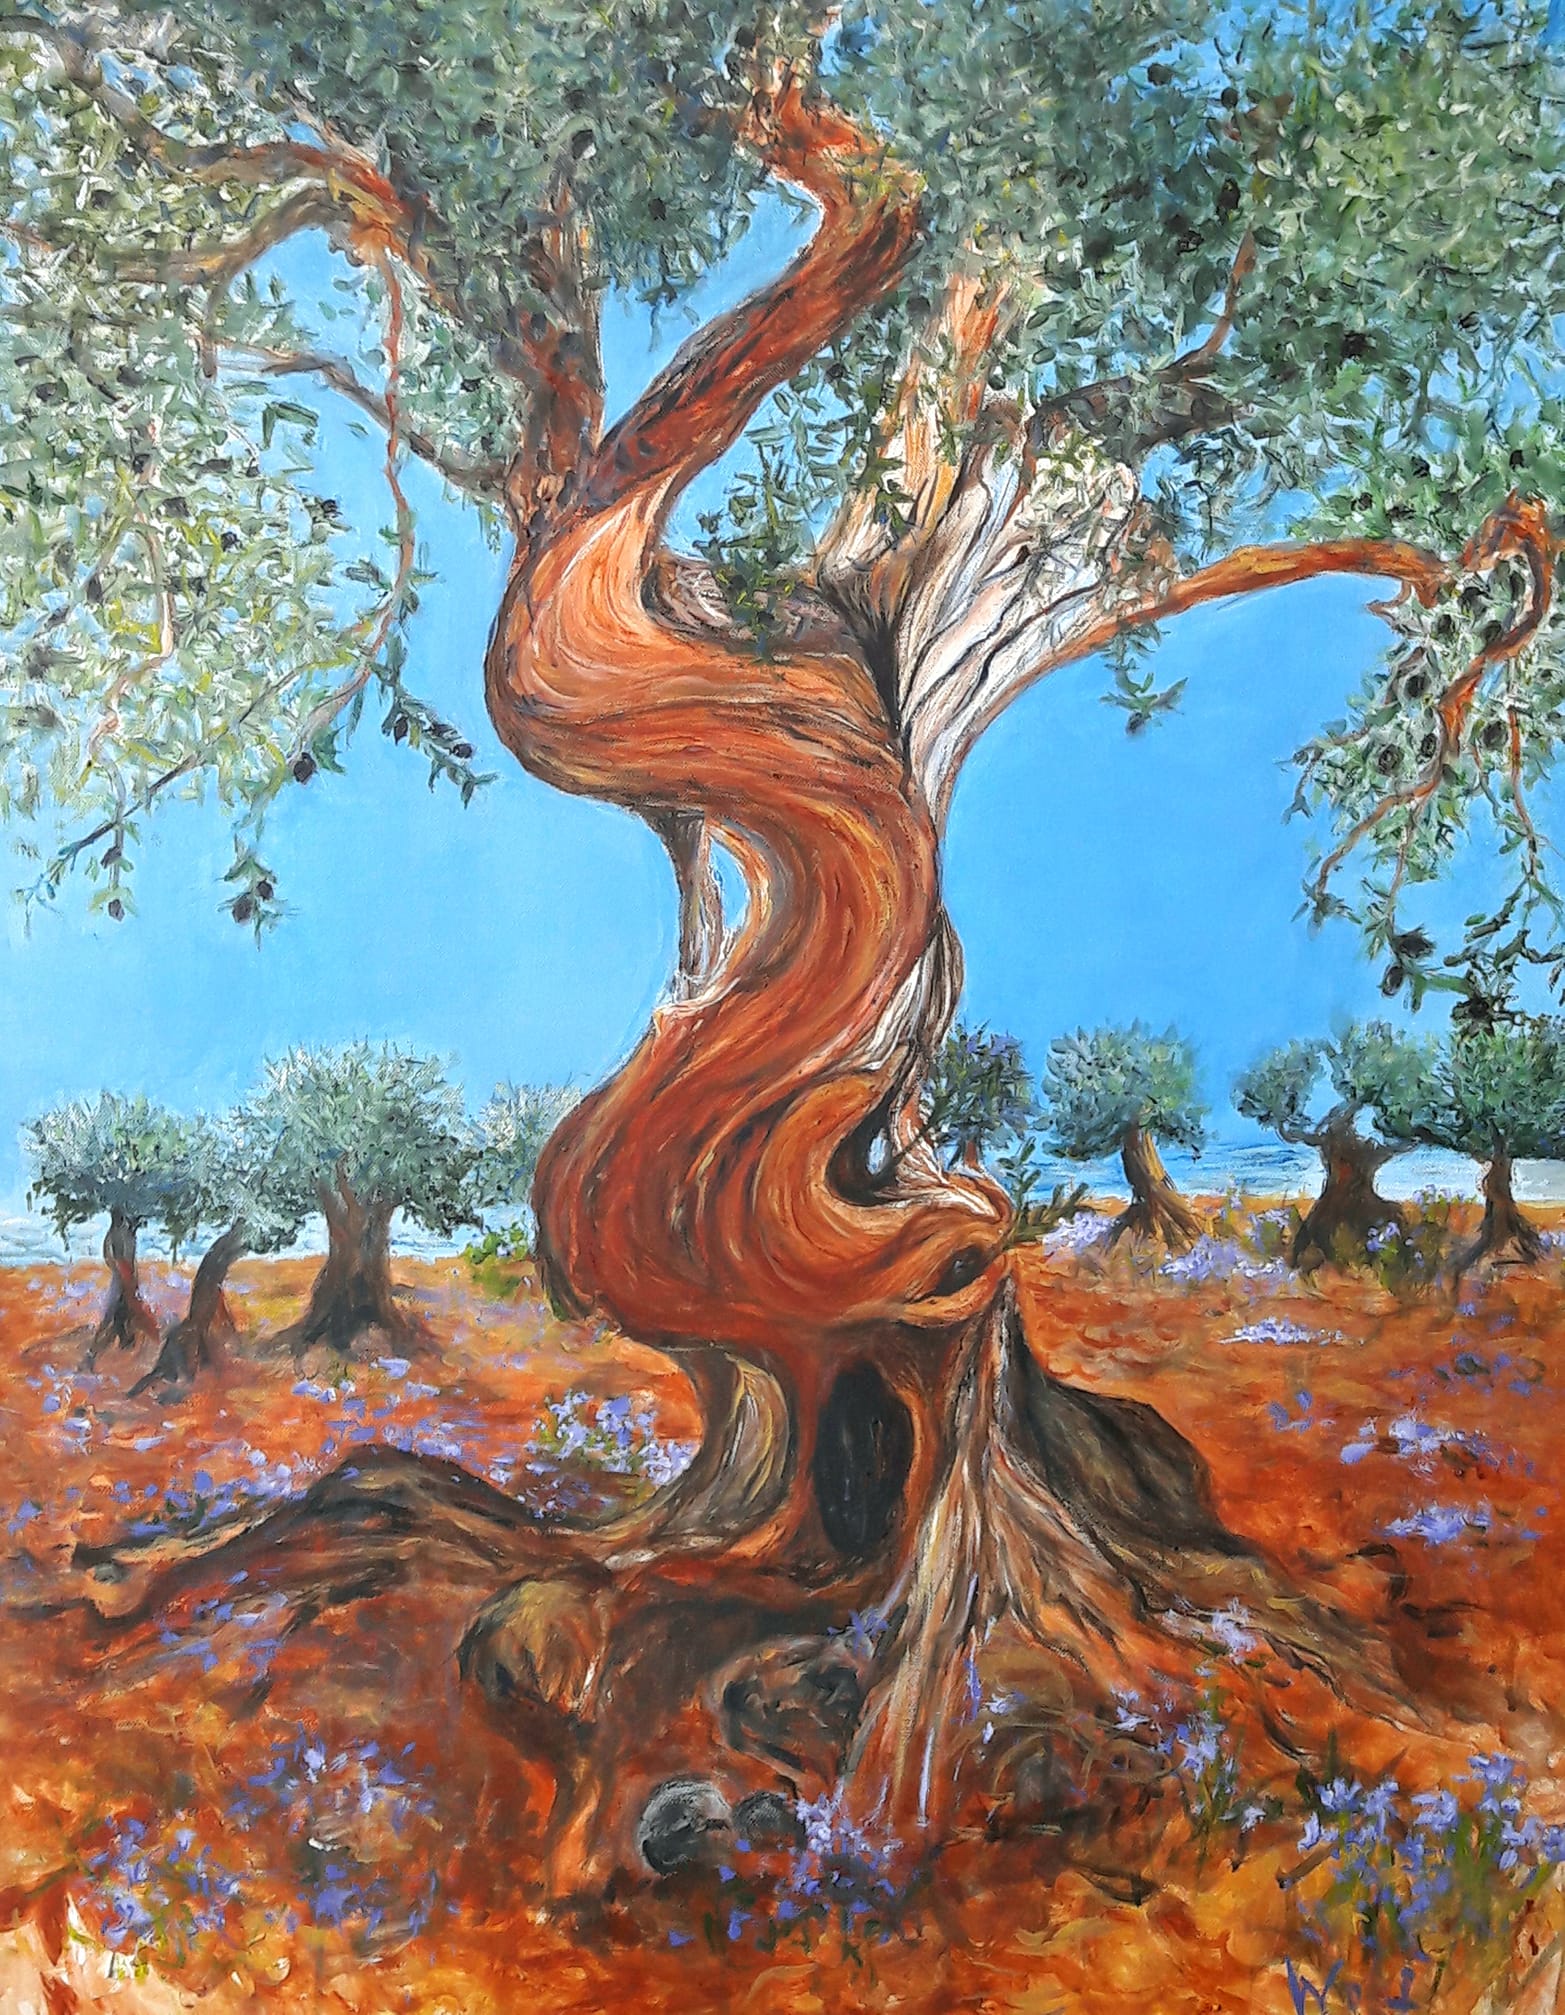 Tangoolivenbaum